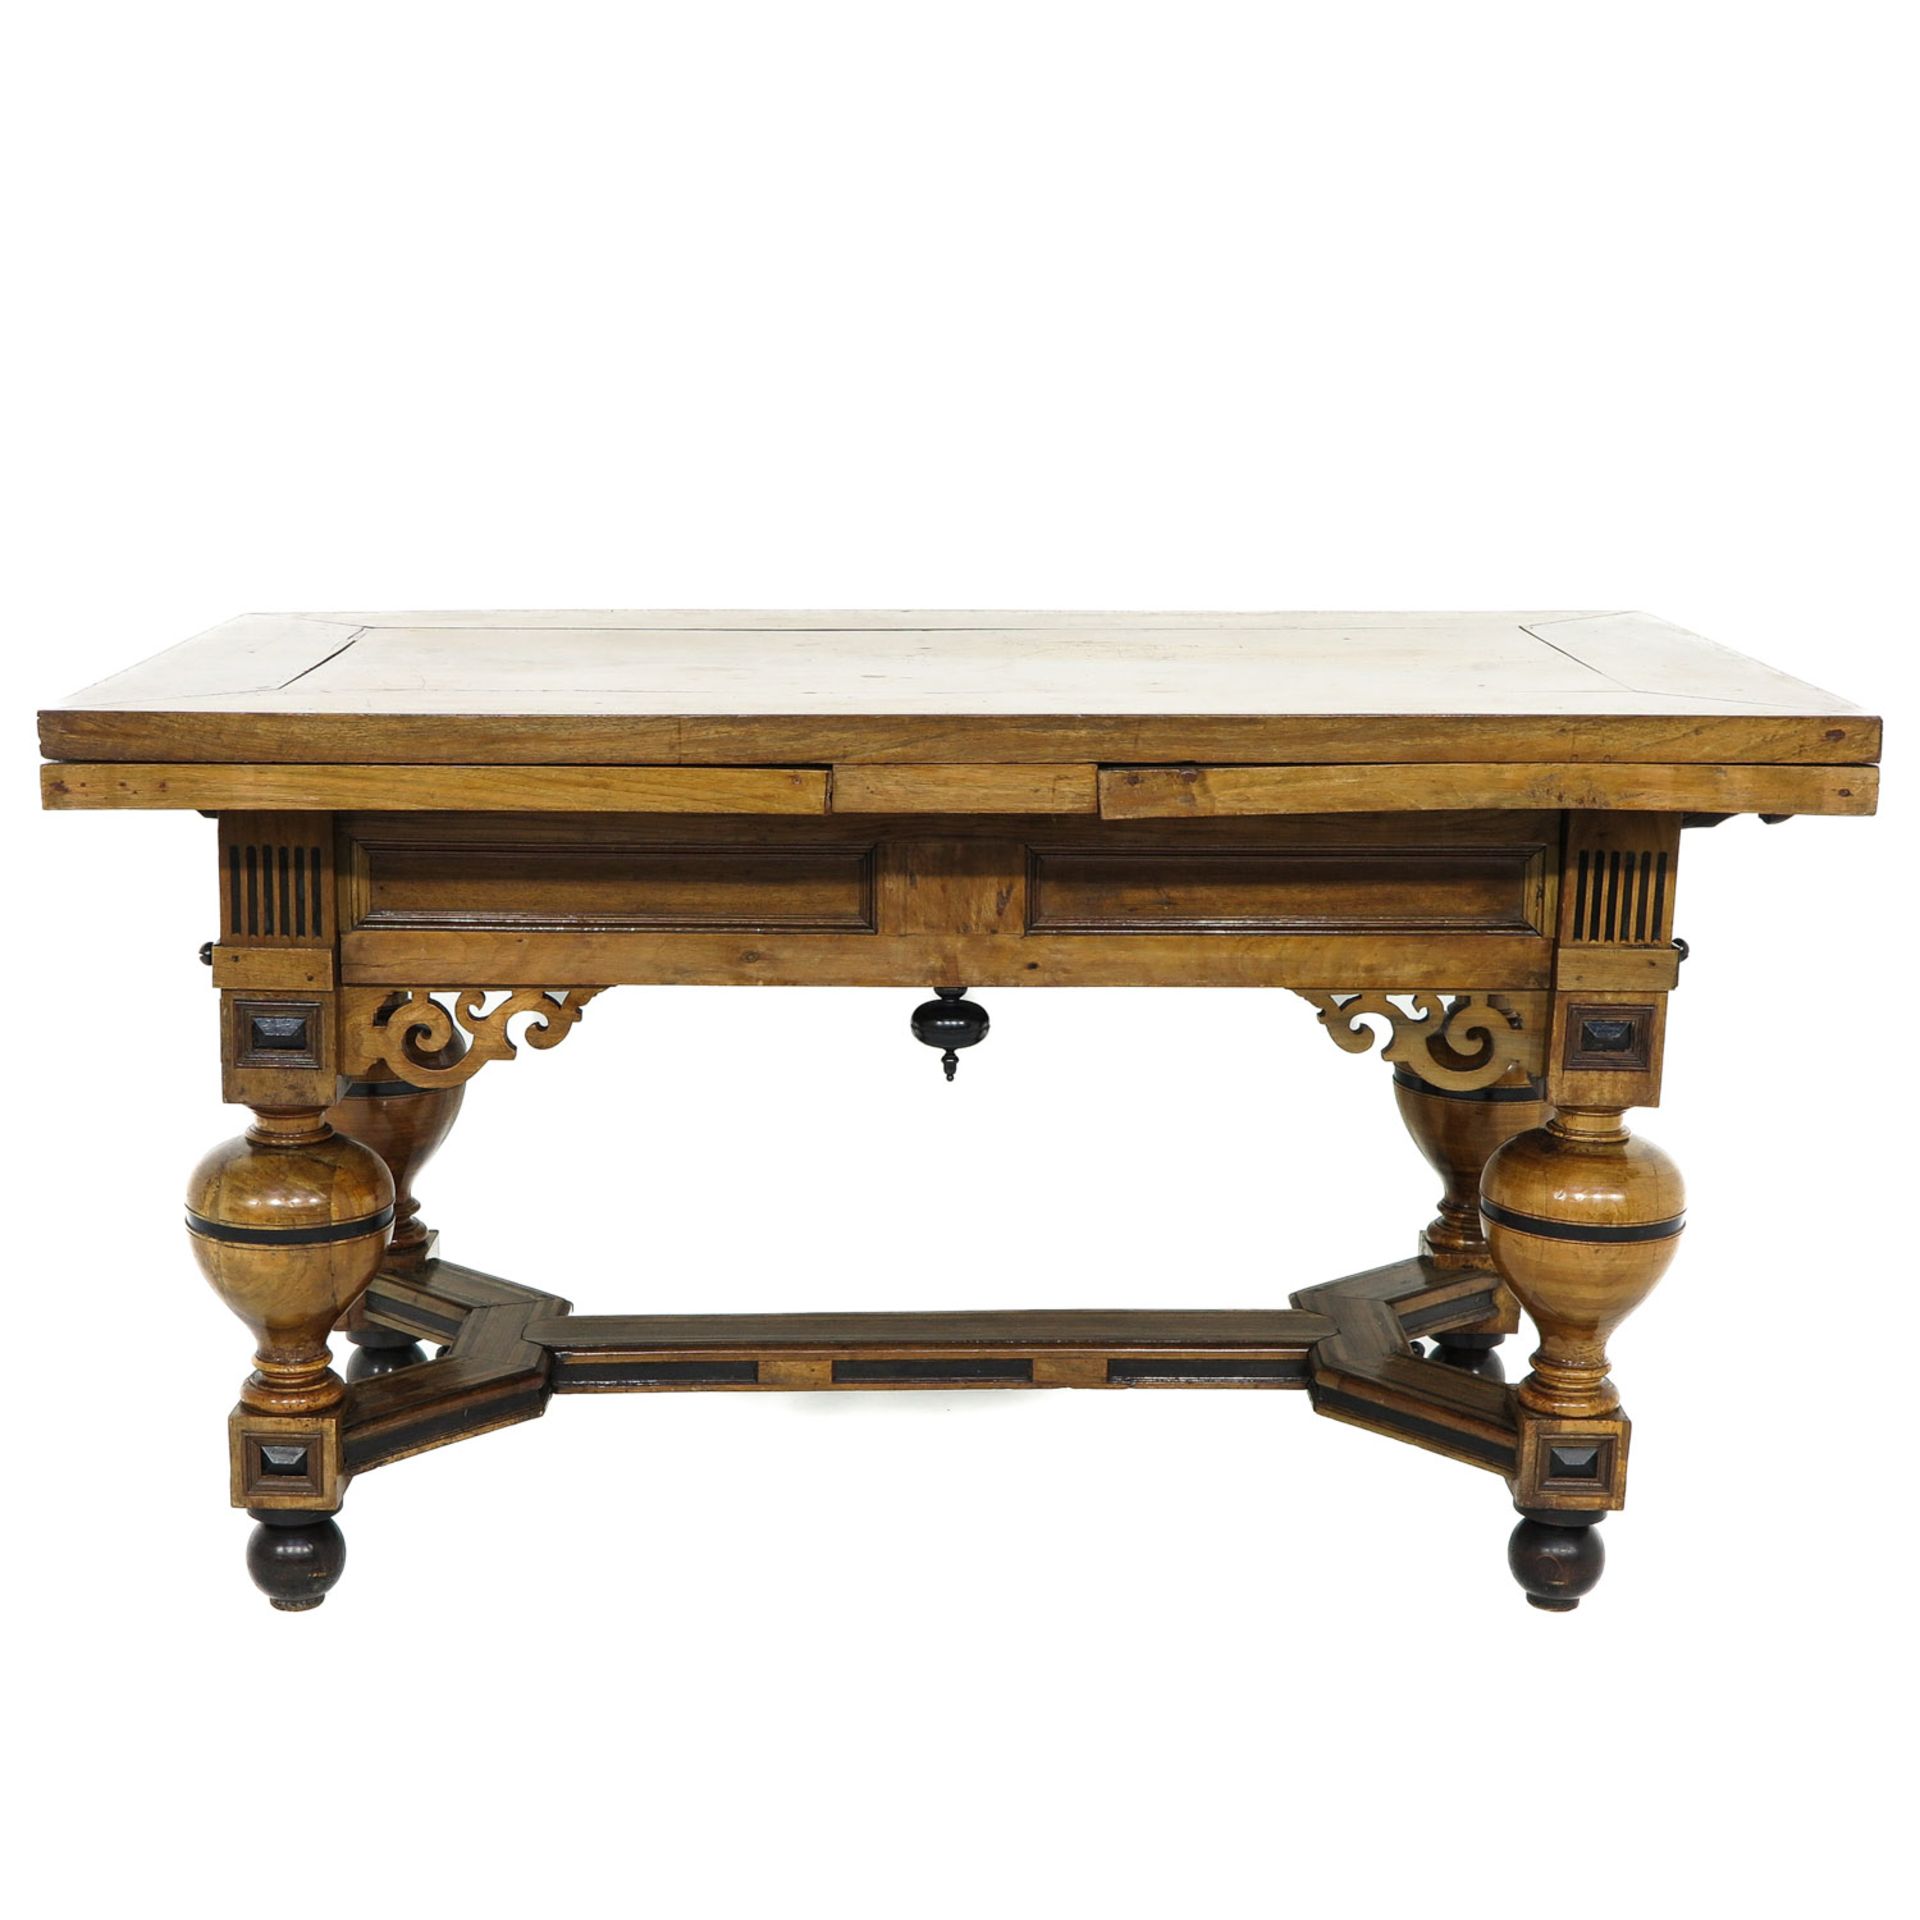 A Very Rare 17th Century Walnut Table